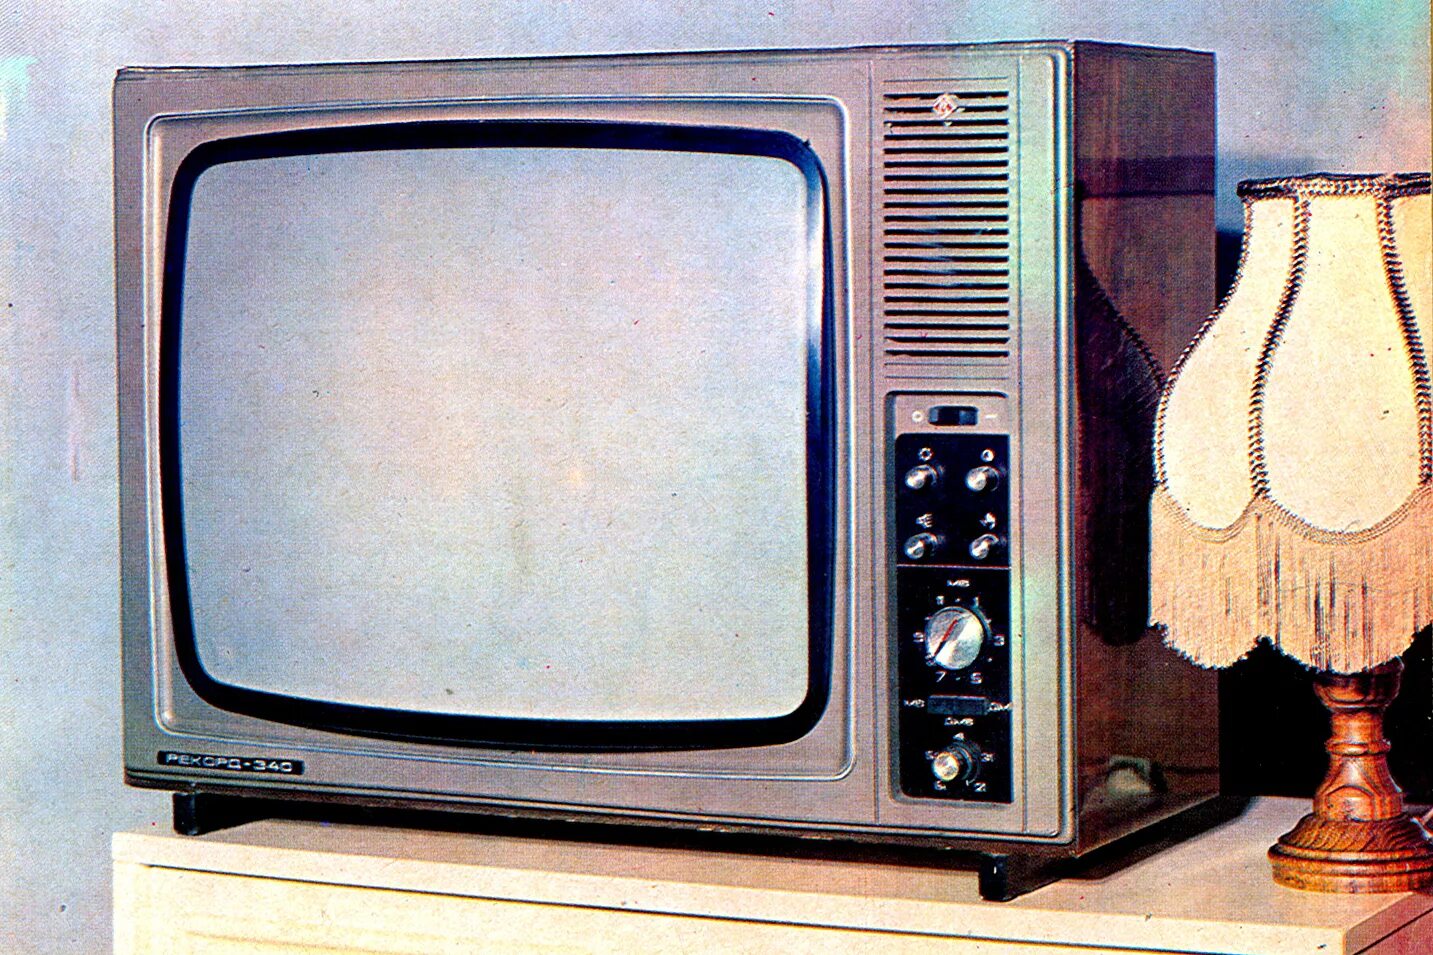 Телевизор ростов на дону цена. Телевизор Березка ц-202. Телевизор National Vintage 1970. Советские товары. Телевизоры советского Союза.